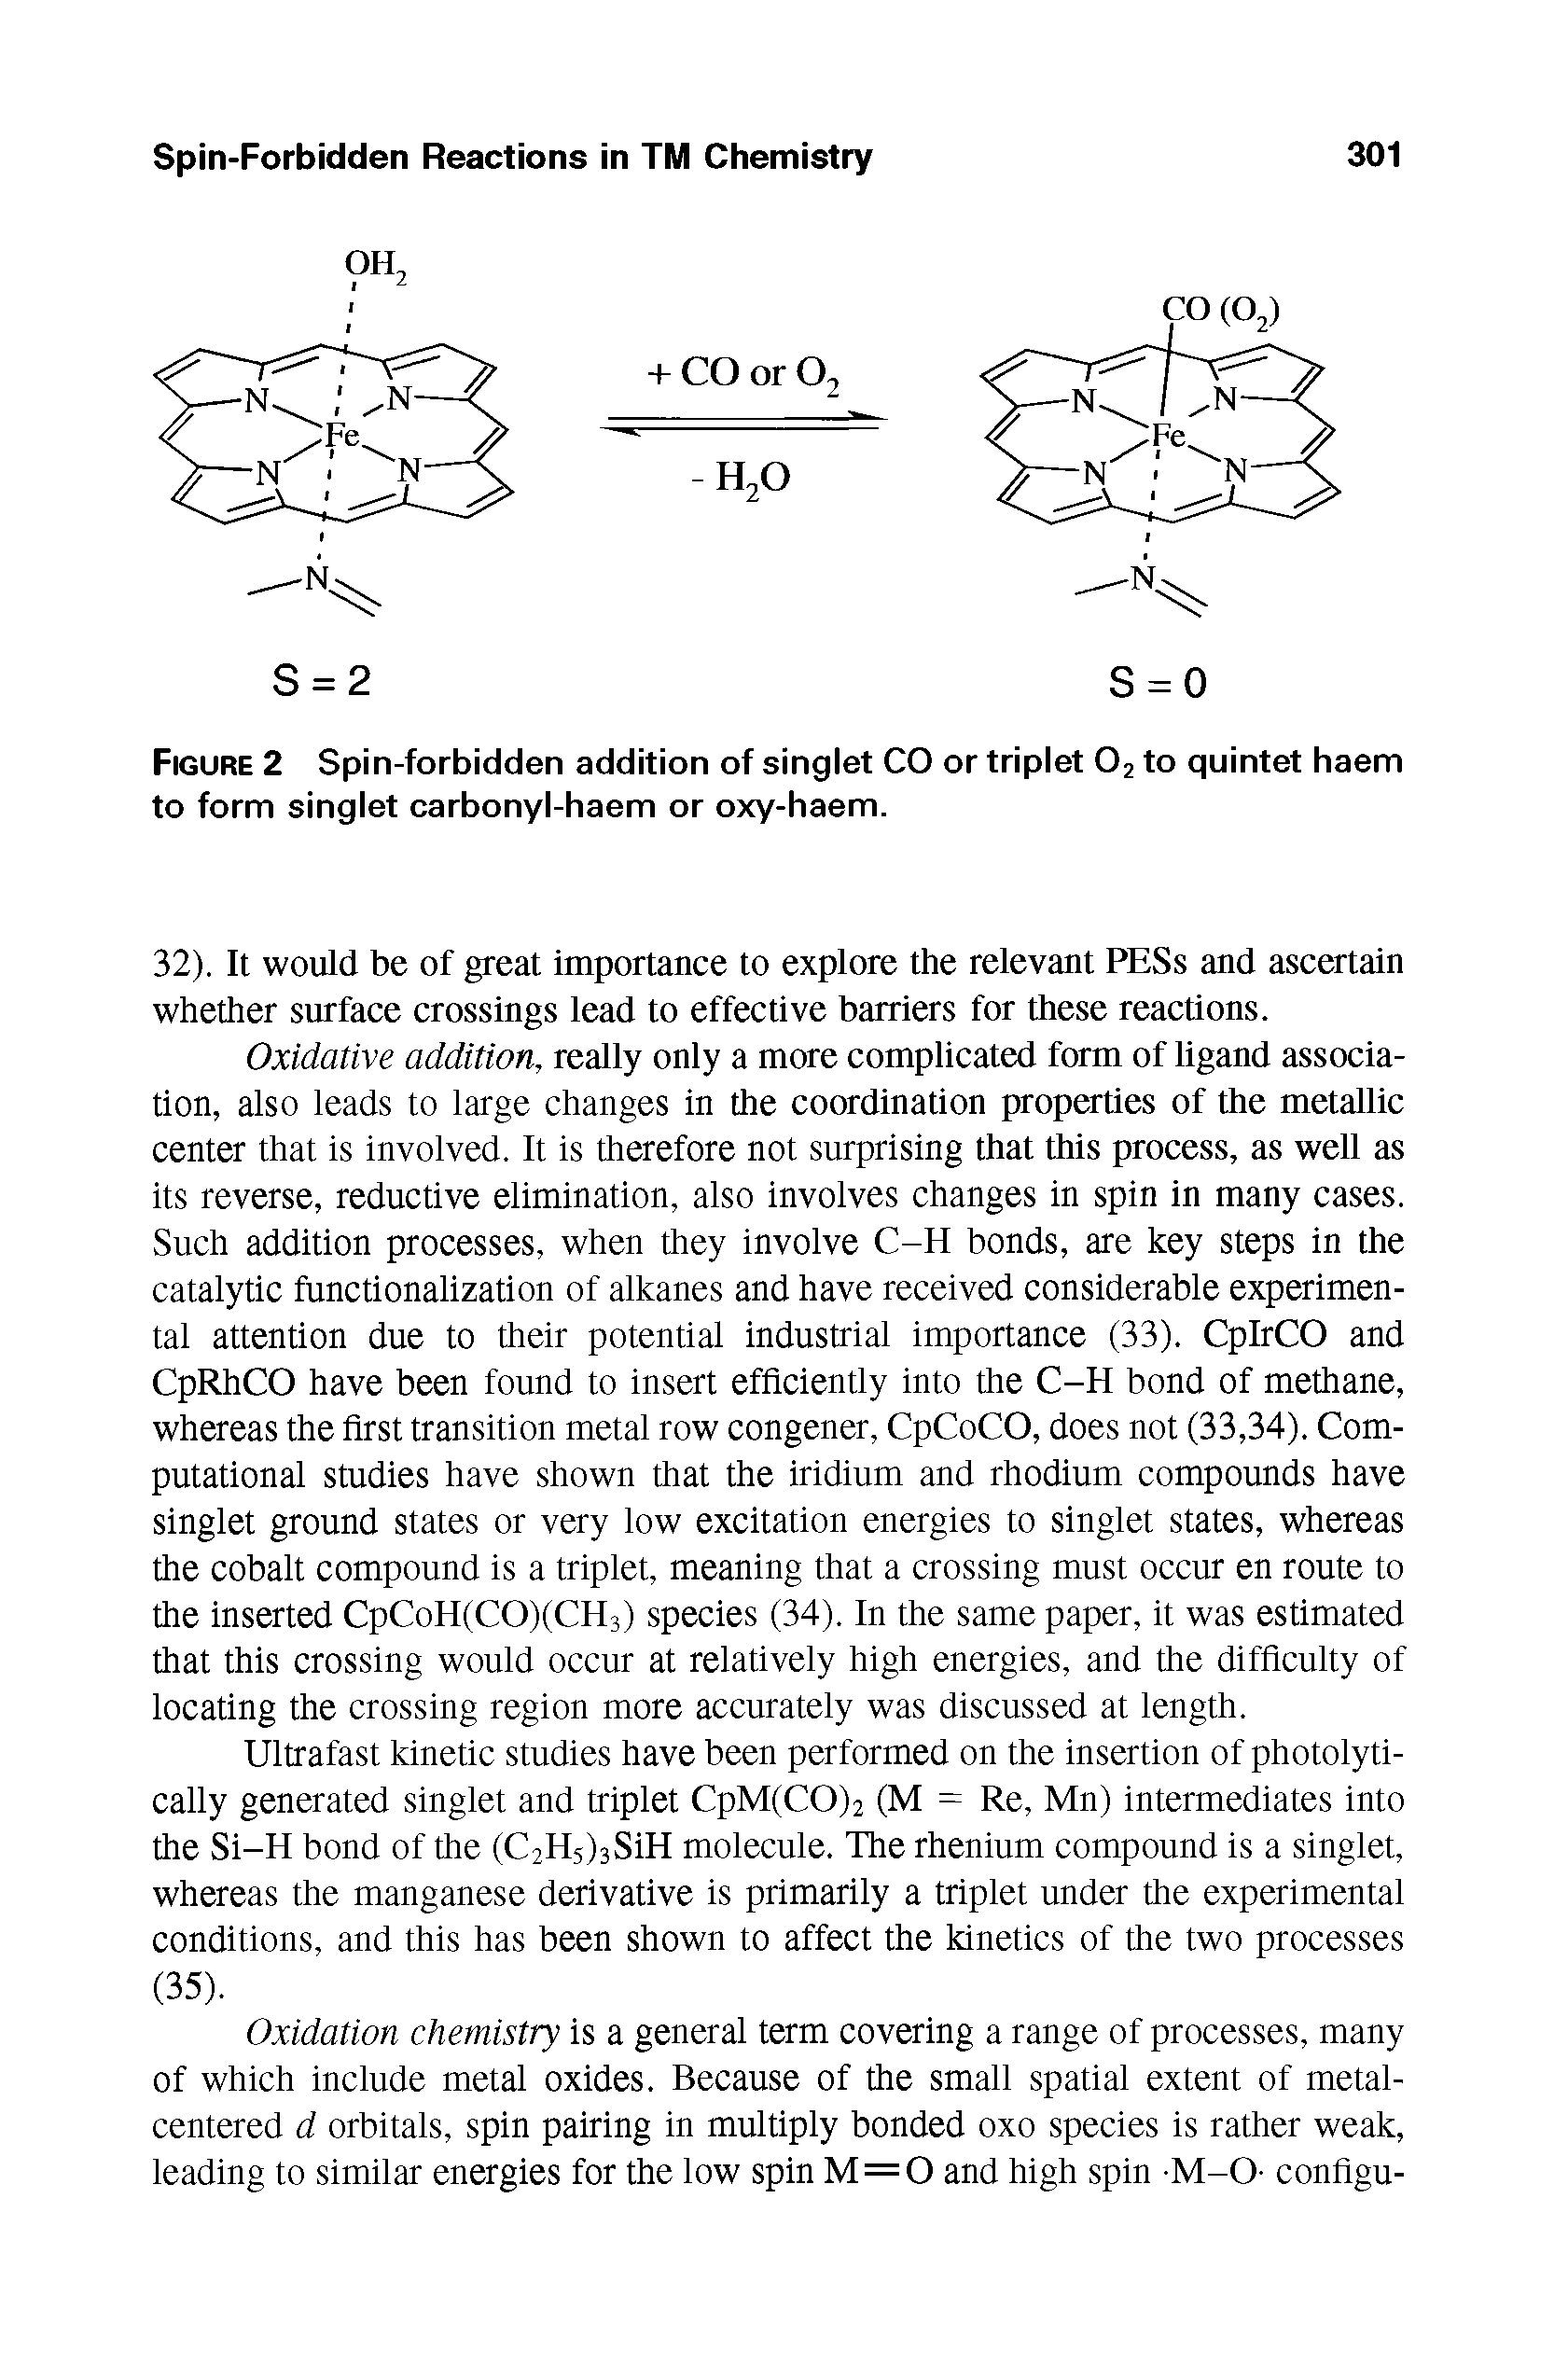 Figure 2 Spin-forbidden addition of singlet CO or triplet O2 to quintet haem to form singlet carbonyl-haem or oxy-haem.